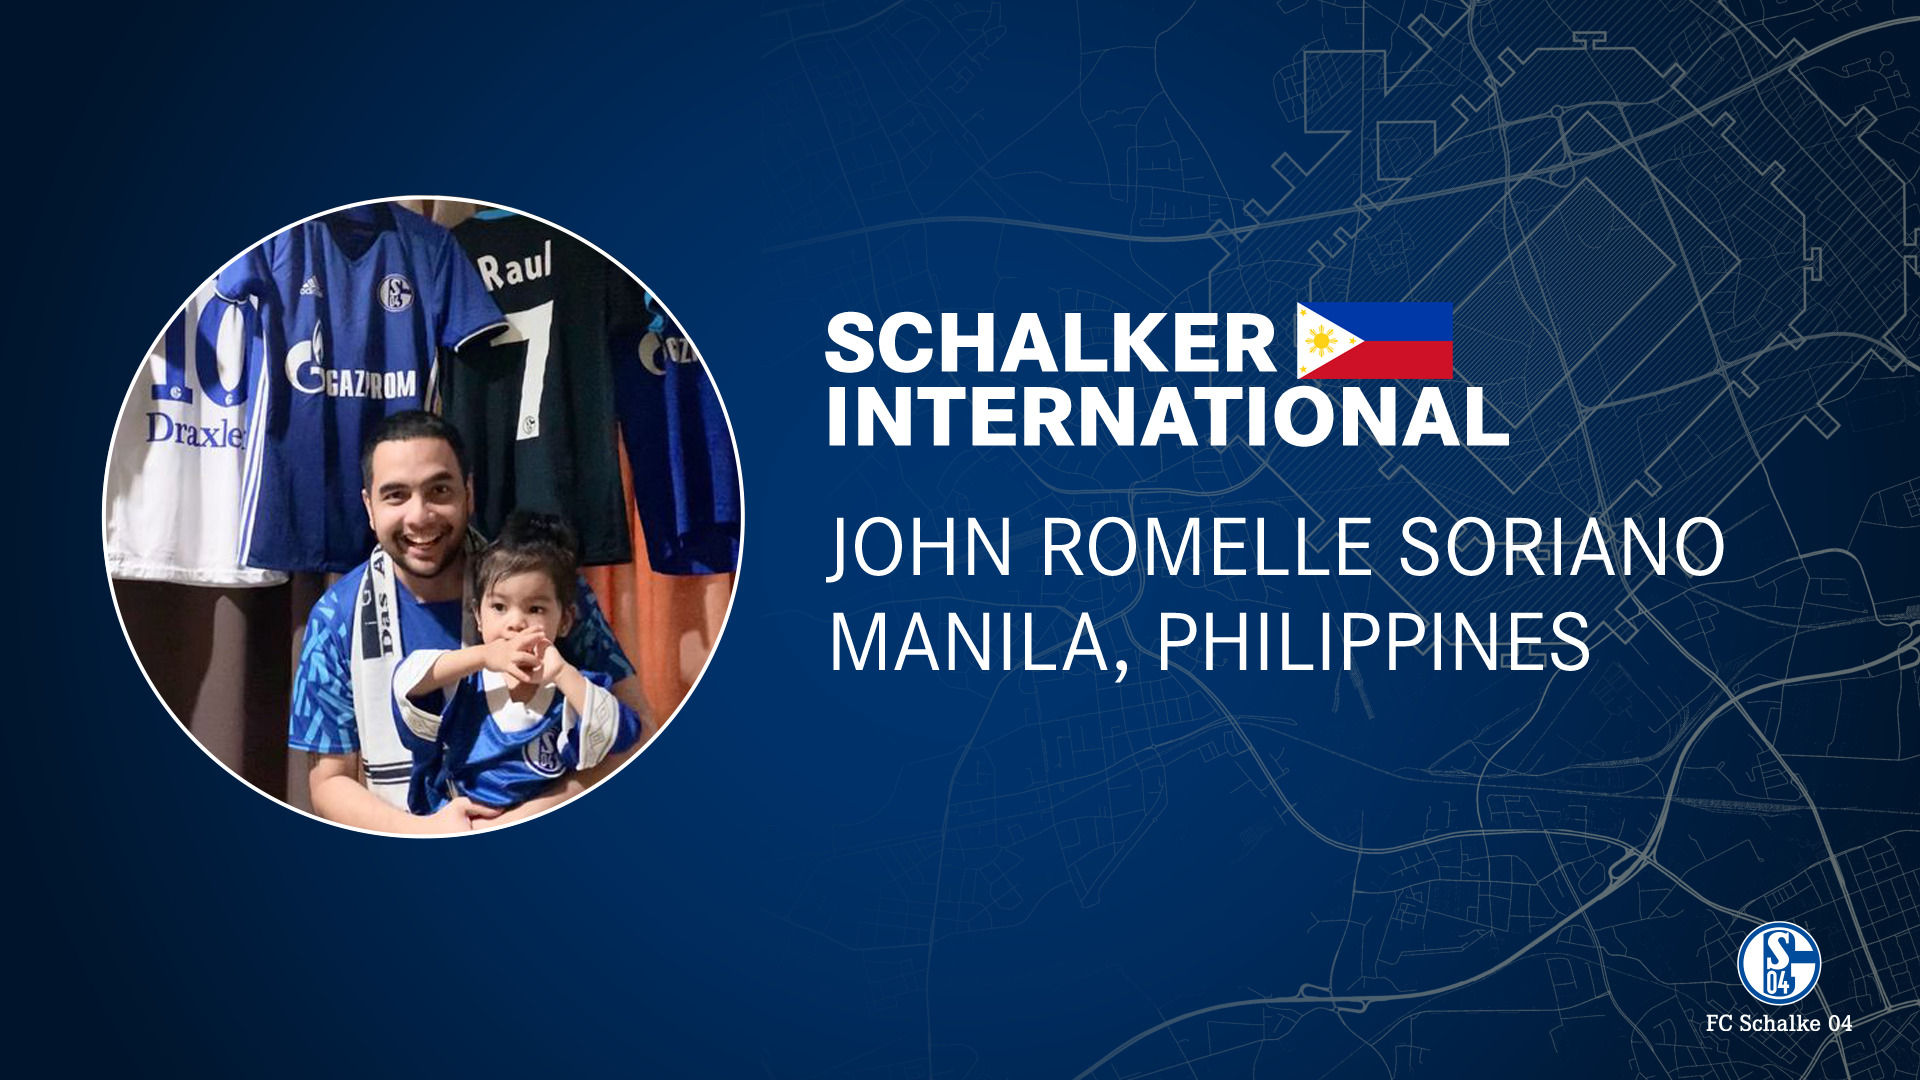 John Soriano Schalker International